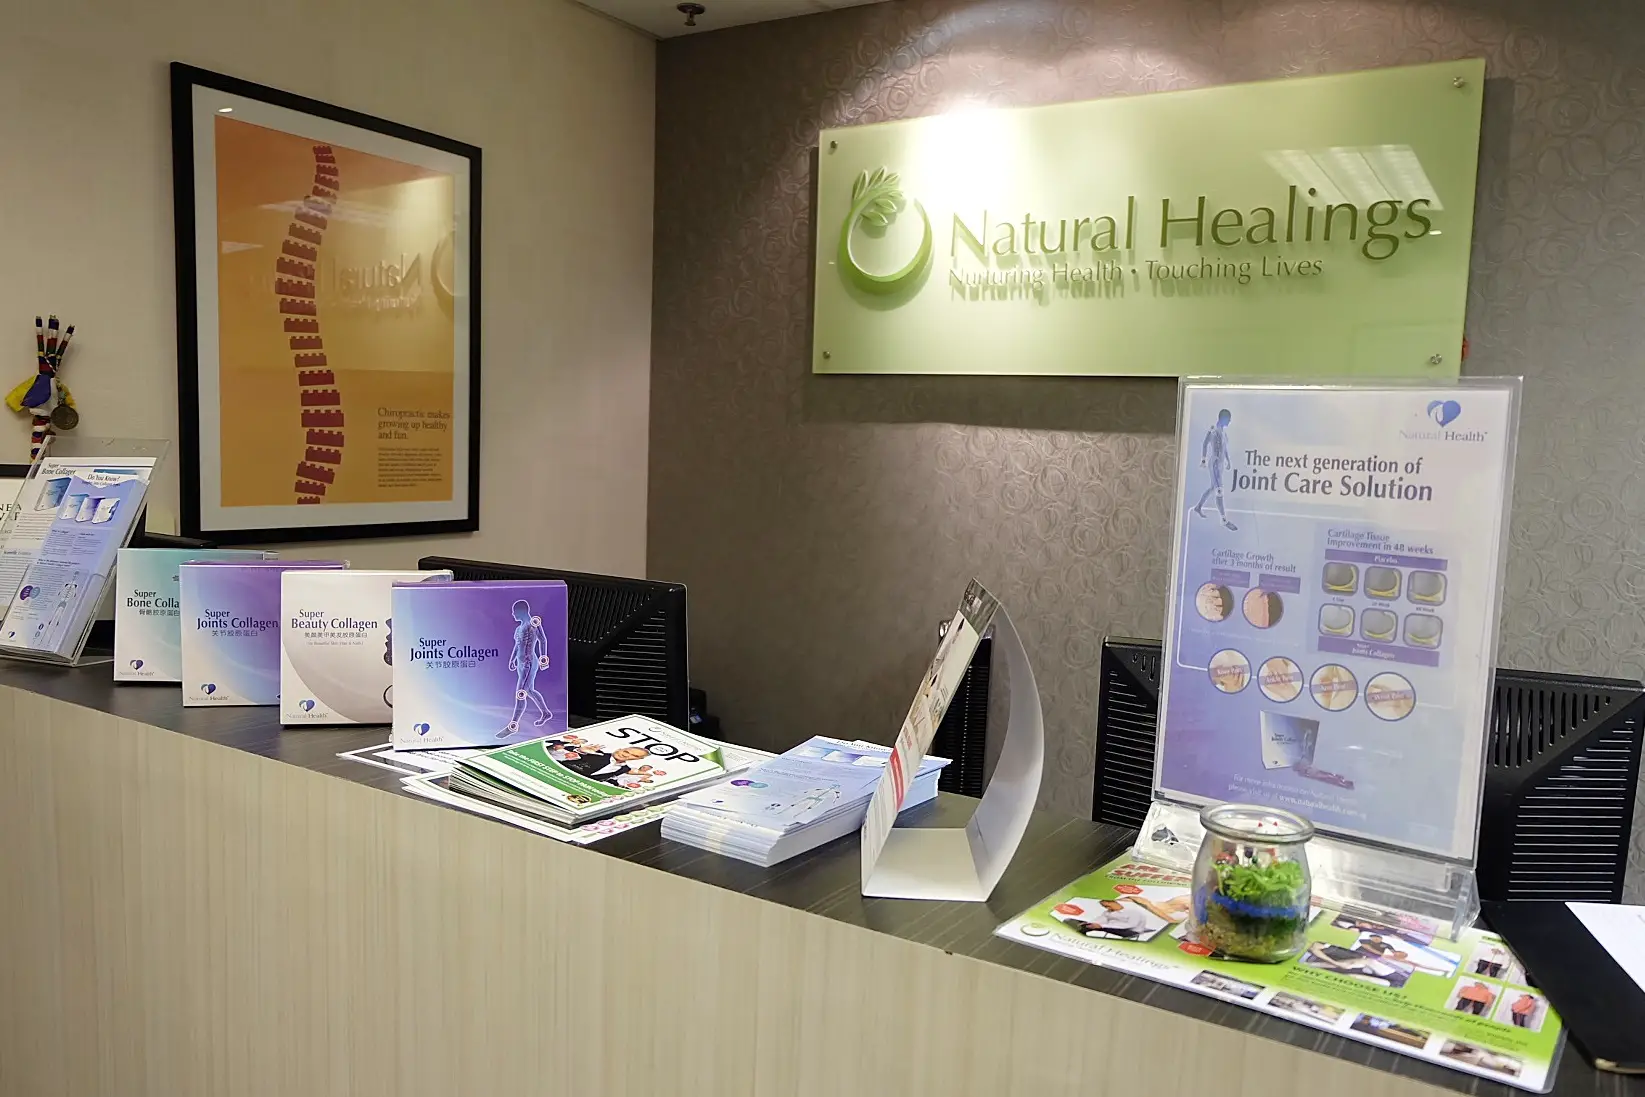  Natural Healings Chiropractor -Chiropractors Singapore  